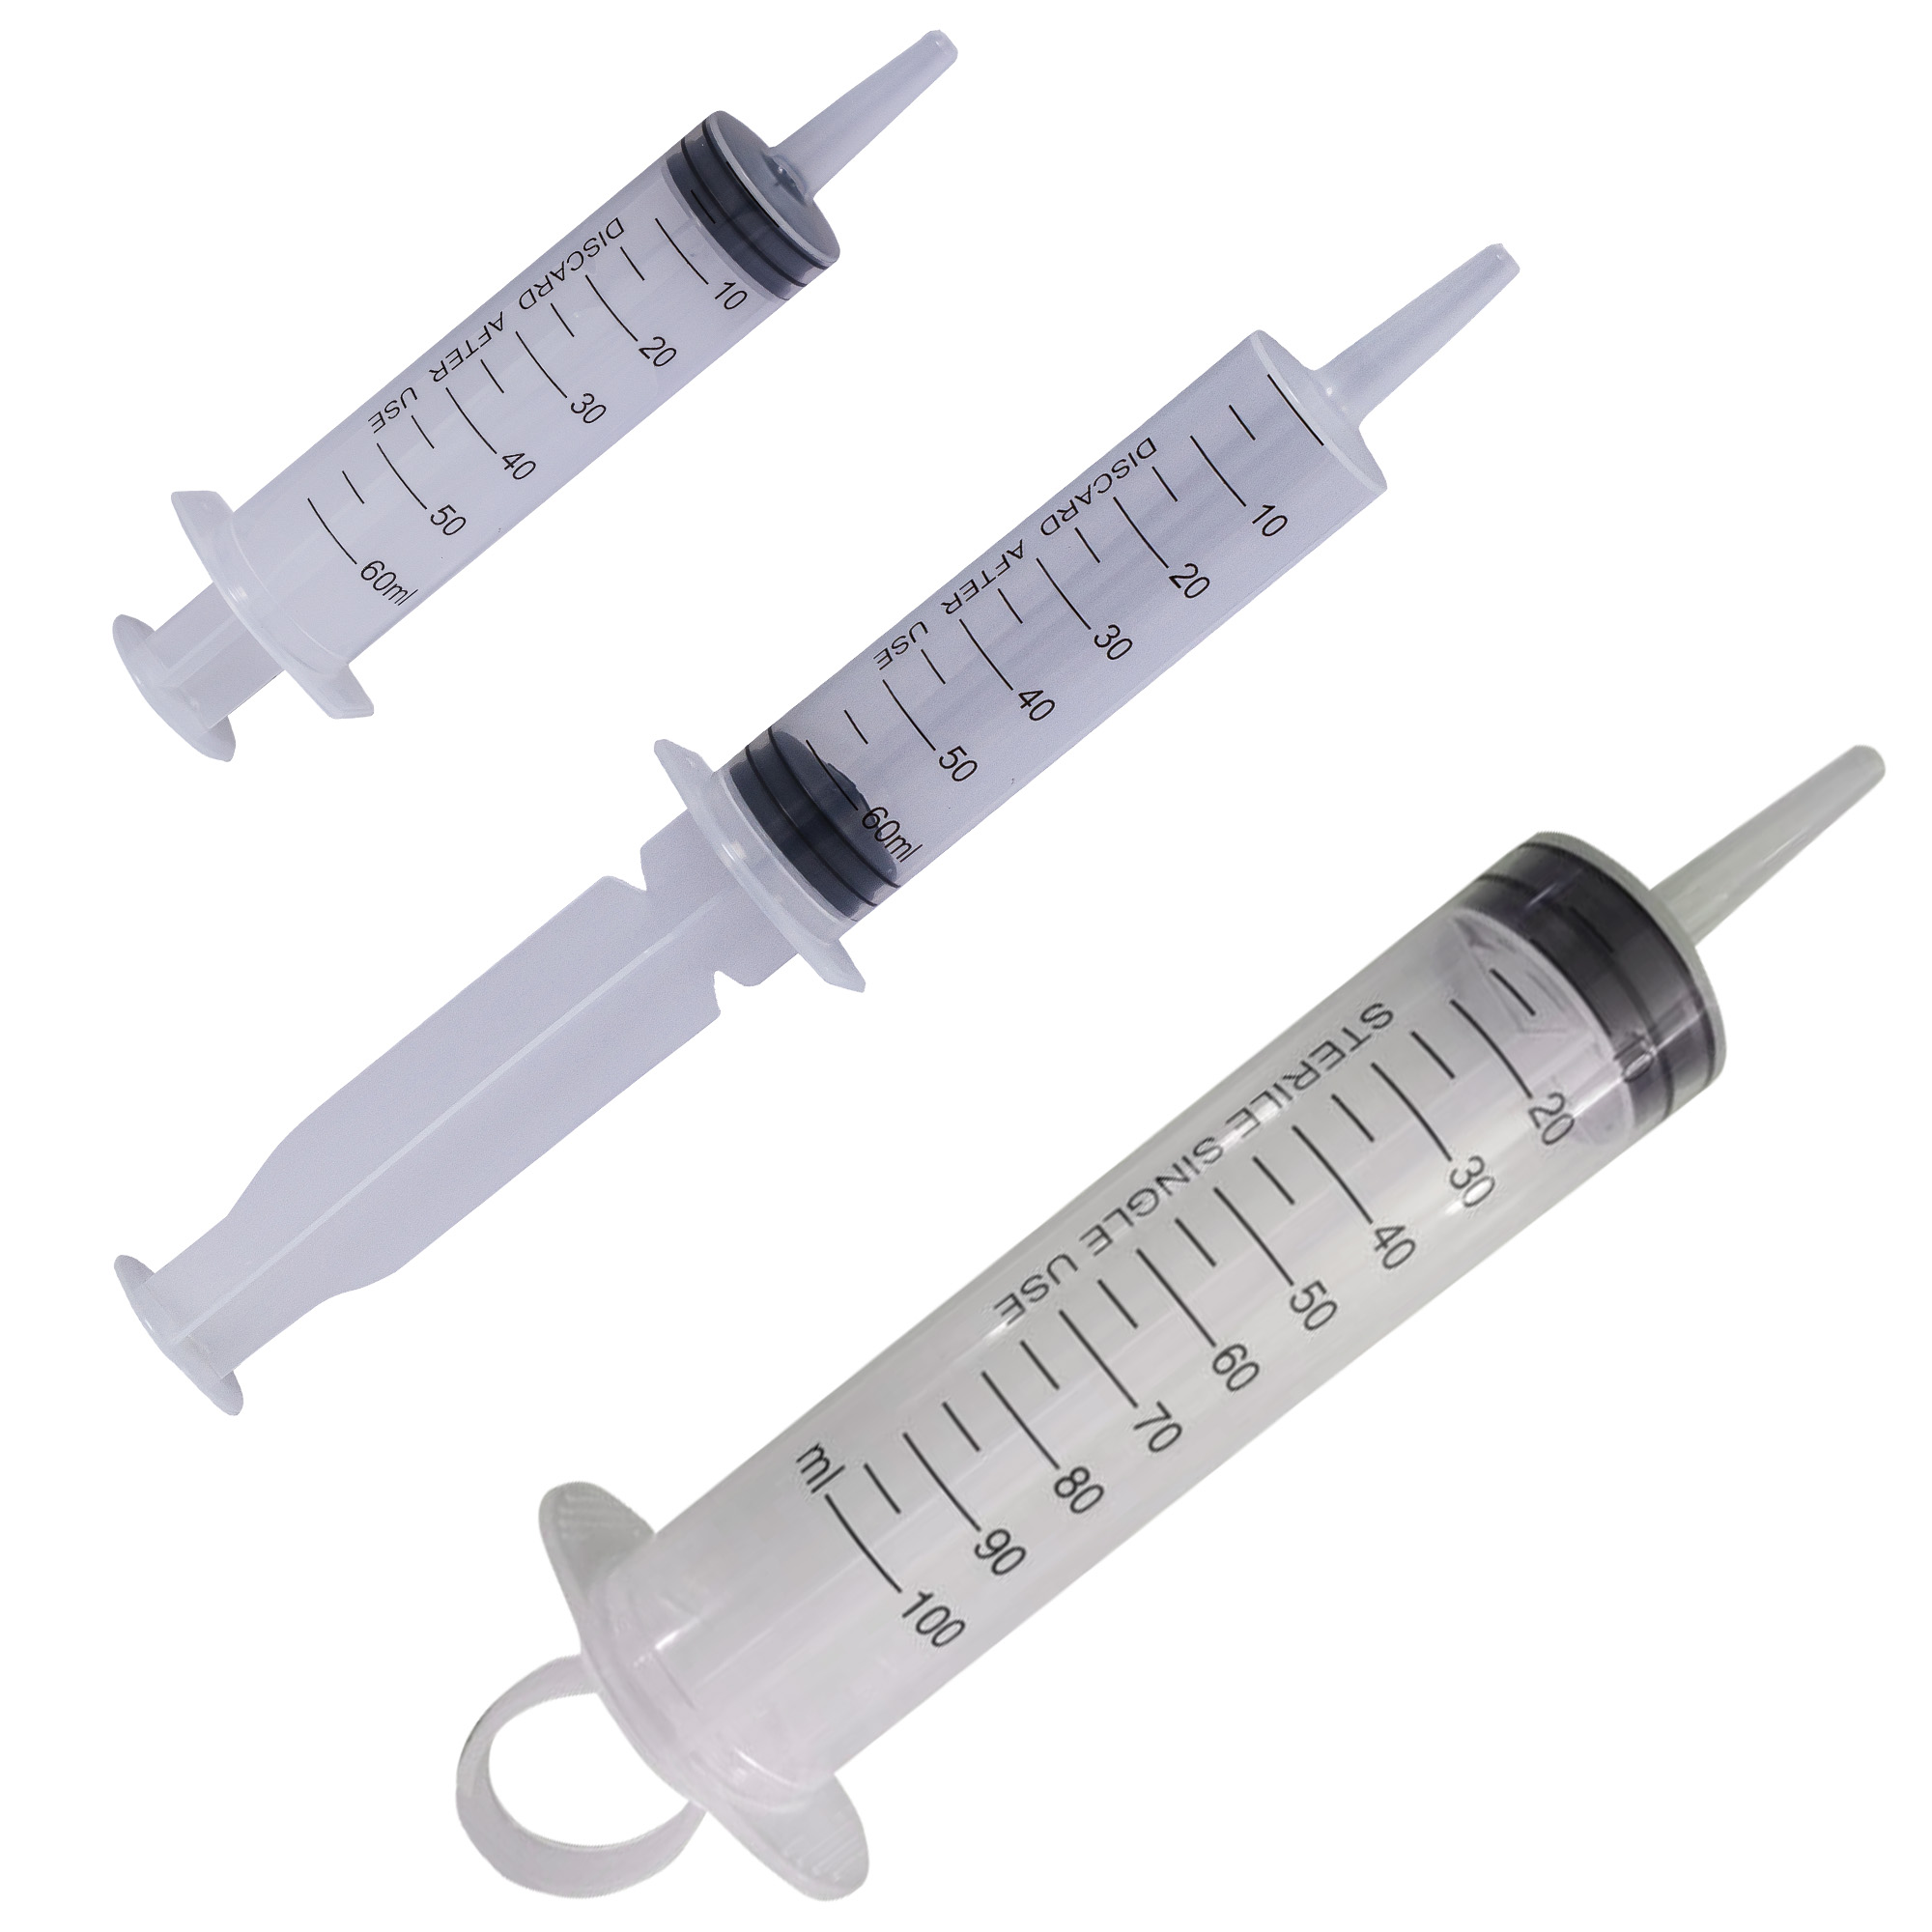 Medical practice/SYRINGES AND MEDICAL NEEDLES/Guyon Syringes